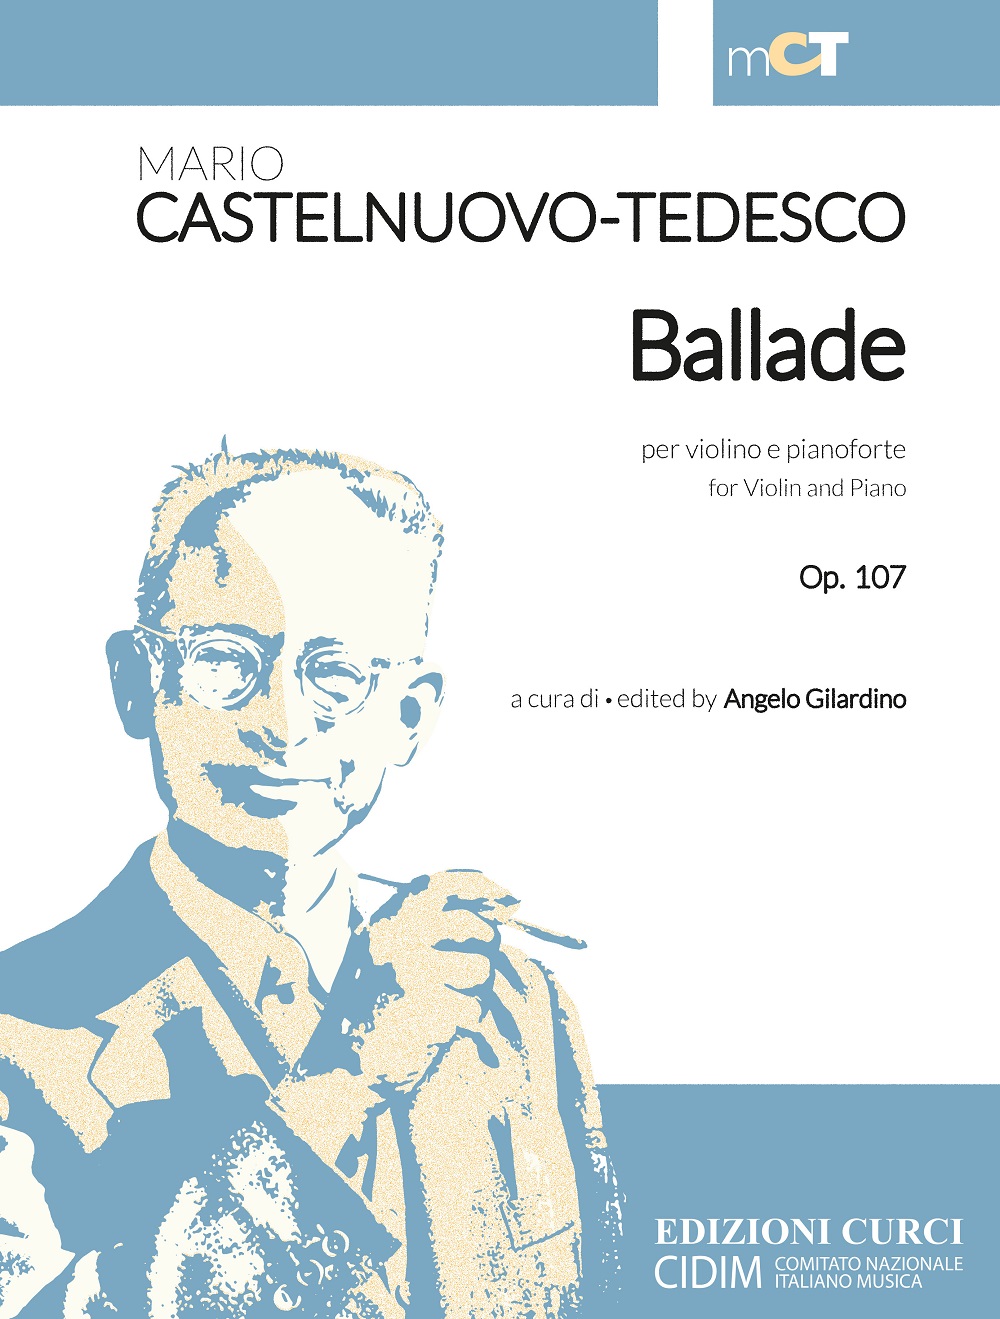 Ballade Per Violino E Pianoforte Op. 107 (CASTELNUOVO-TEDESCO MARIO)